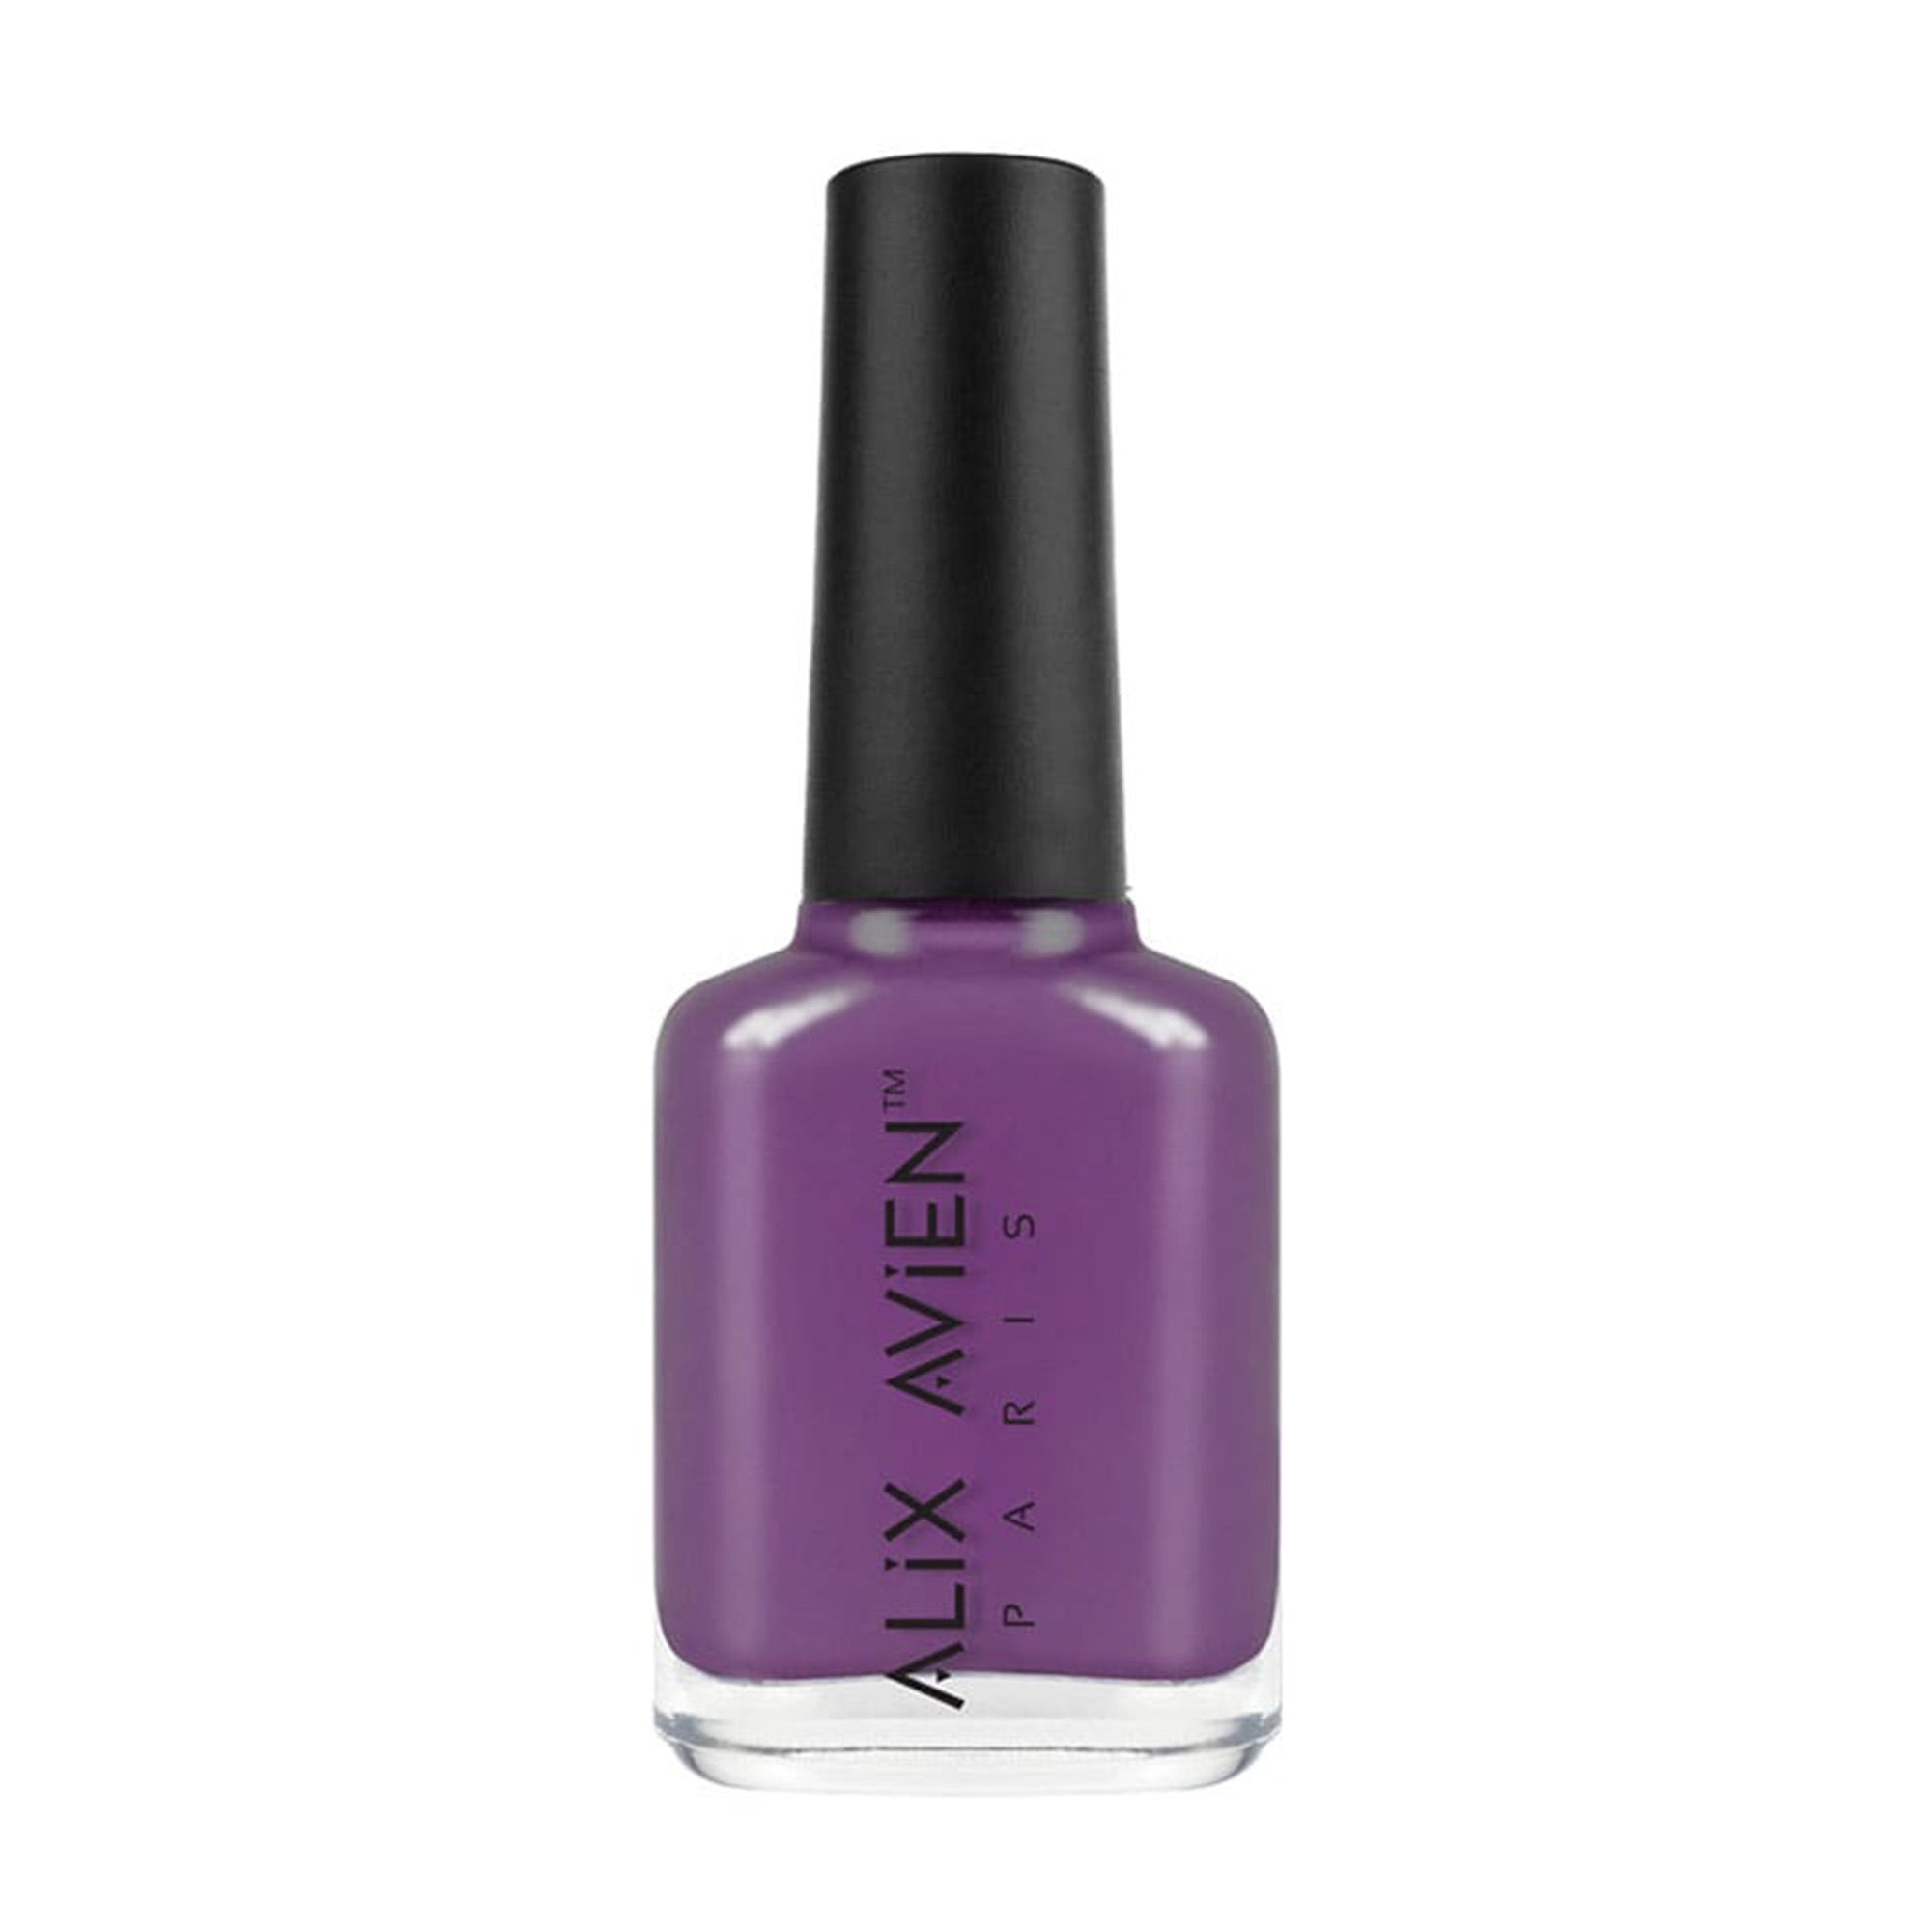 Alix Avien - Nail Polish No.76 (Perfectly Purple)